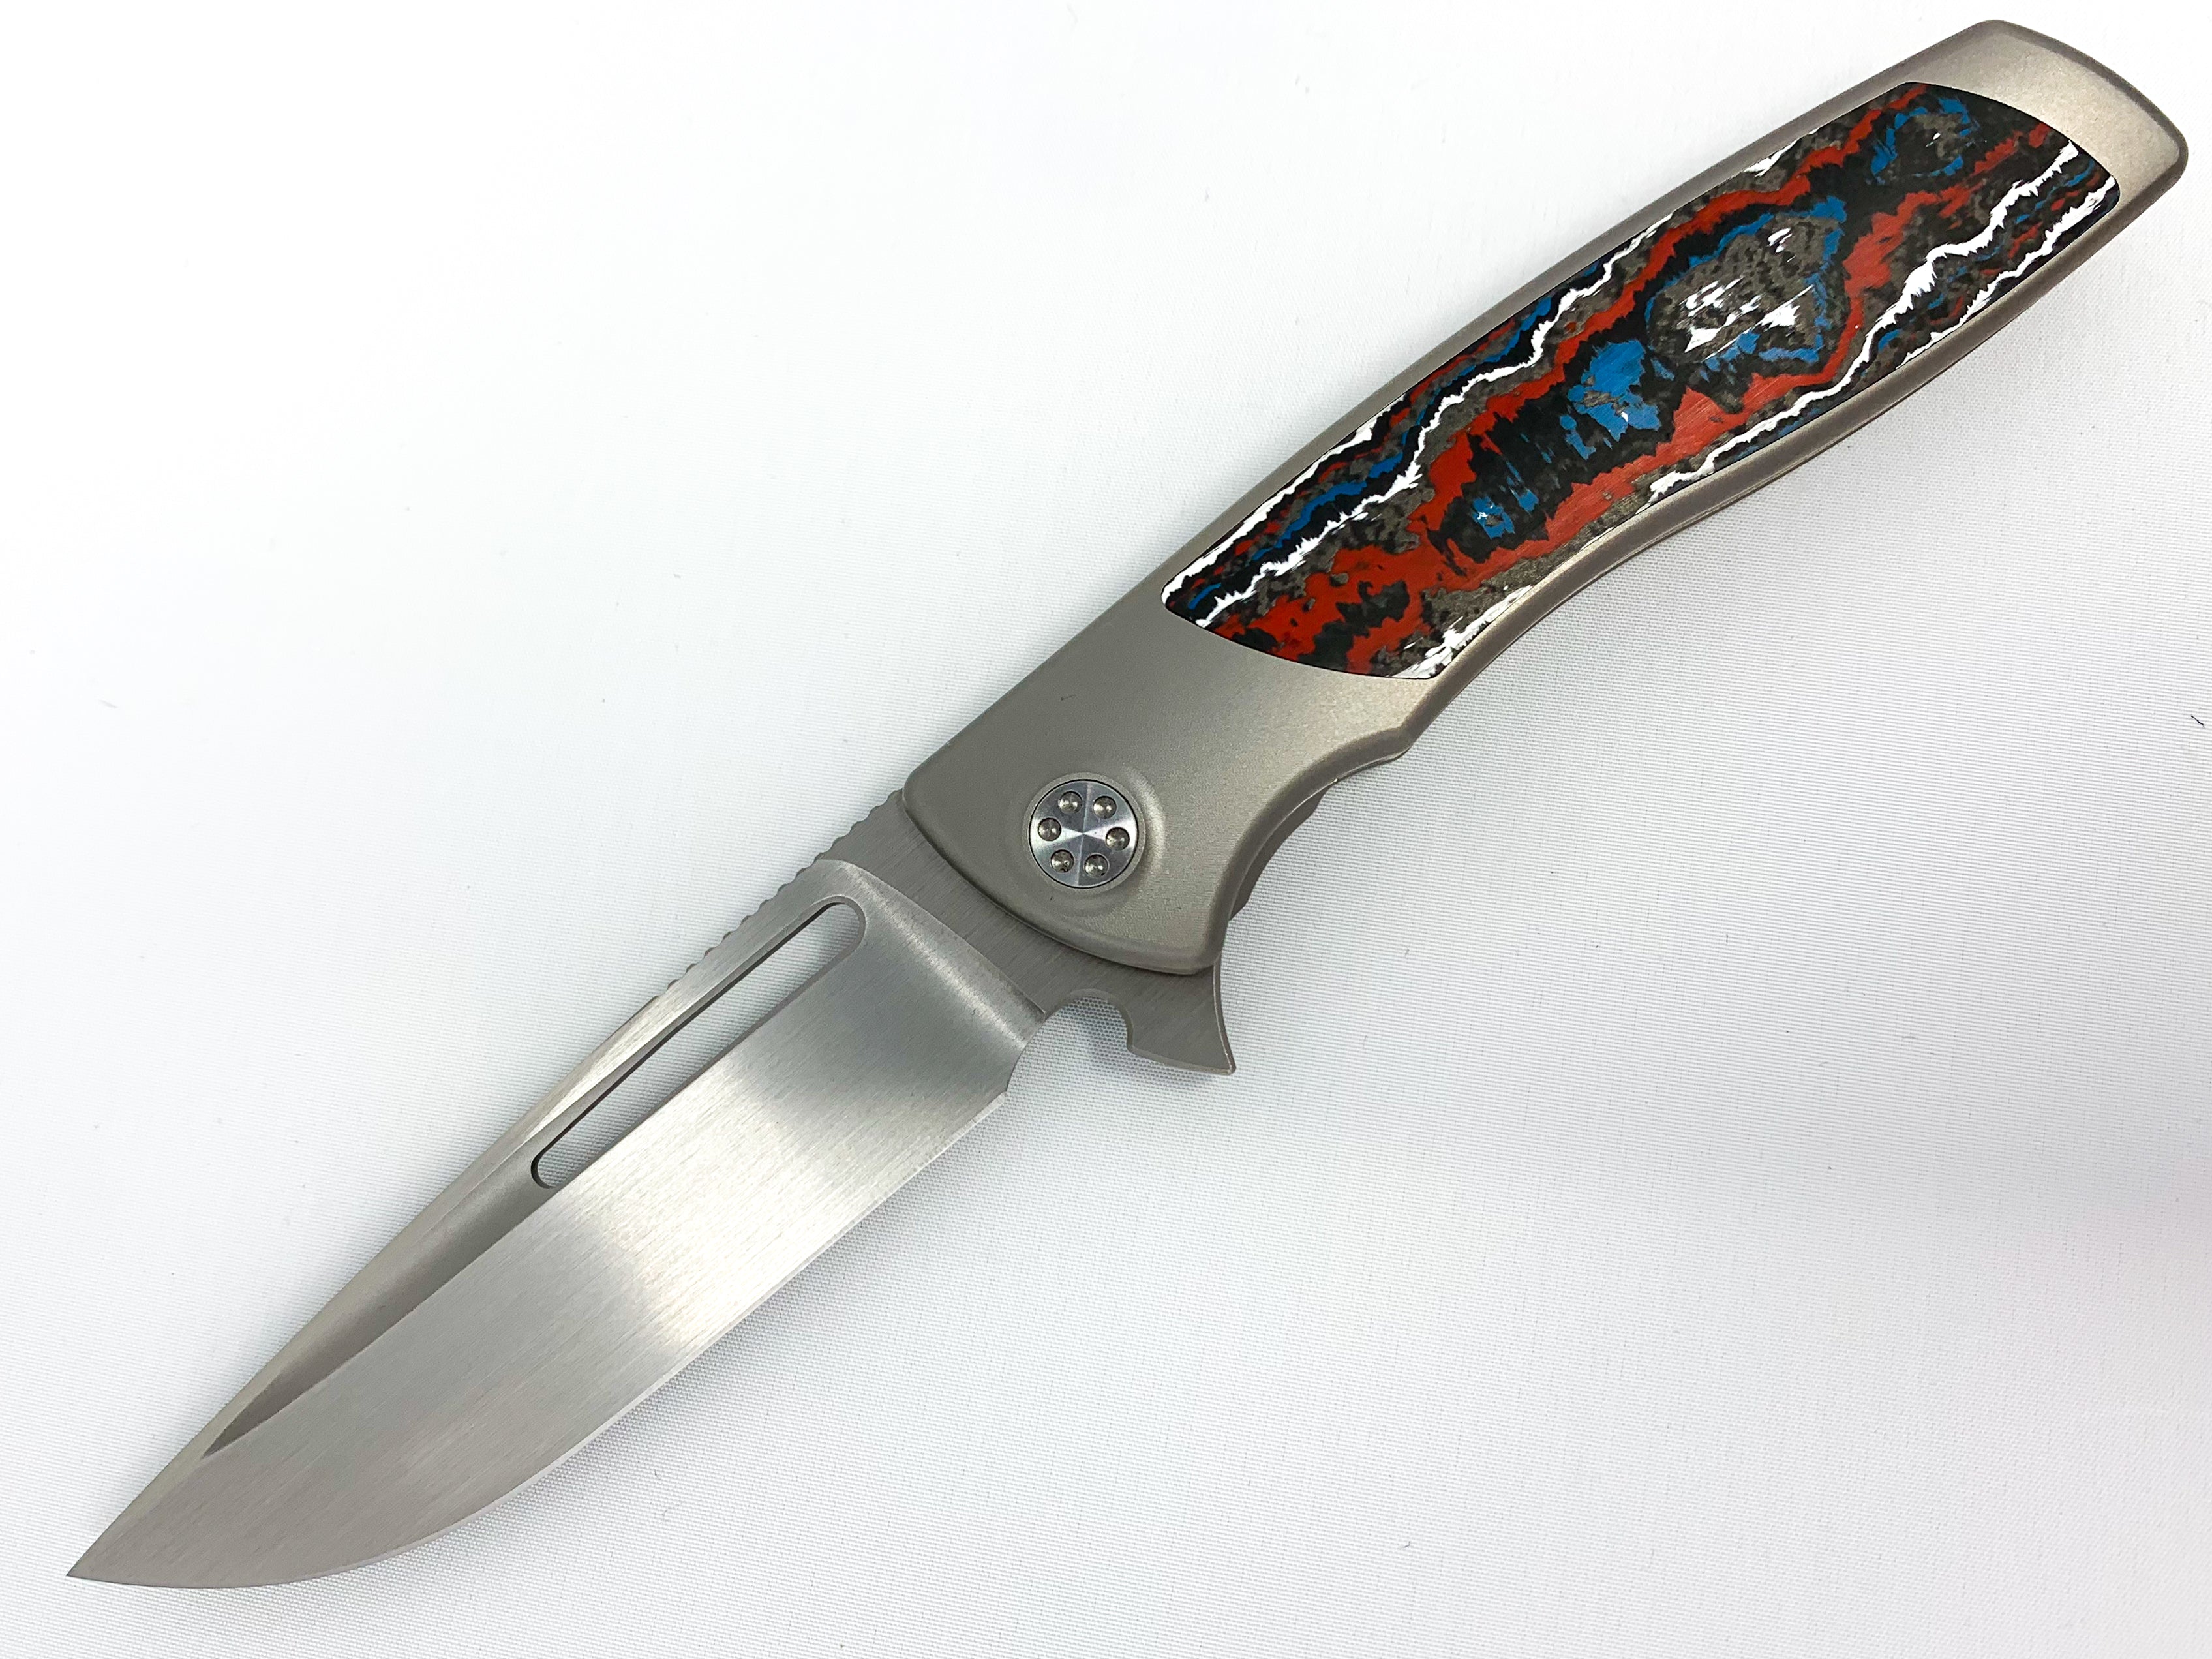 Sharp By Design Mini Evo - M390 Drop Point Blade - Fat Carbon "Nebula" Inlay - Titanium Handle - CLOSEOUT-1